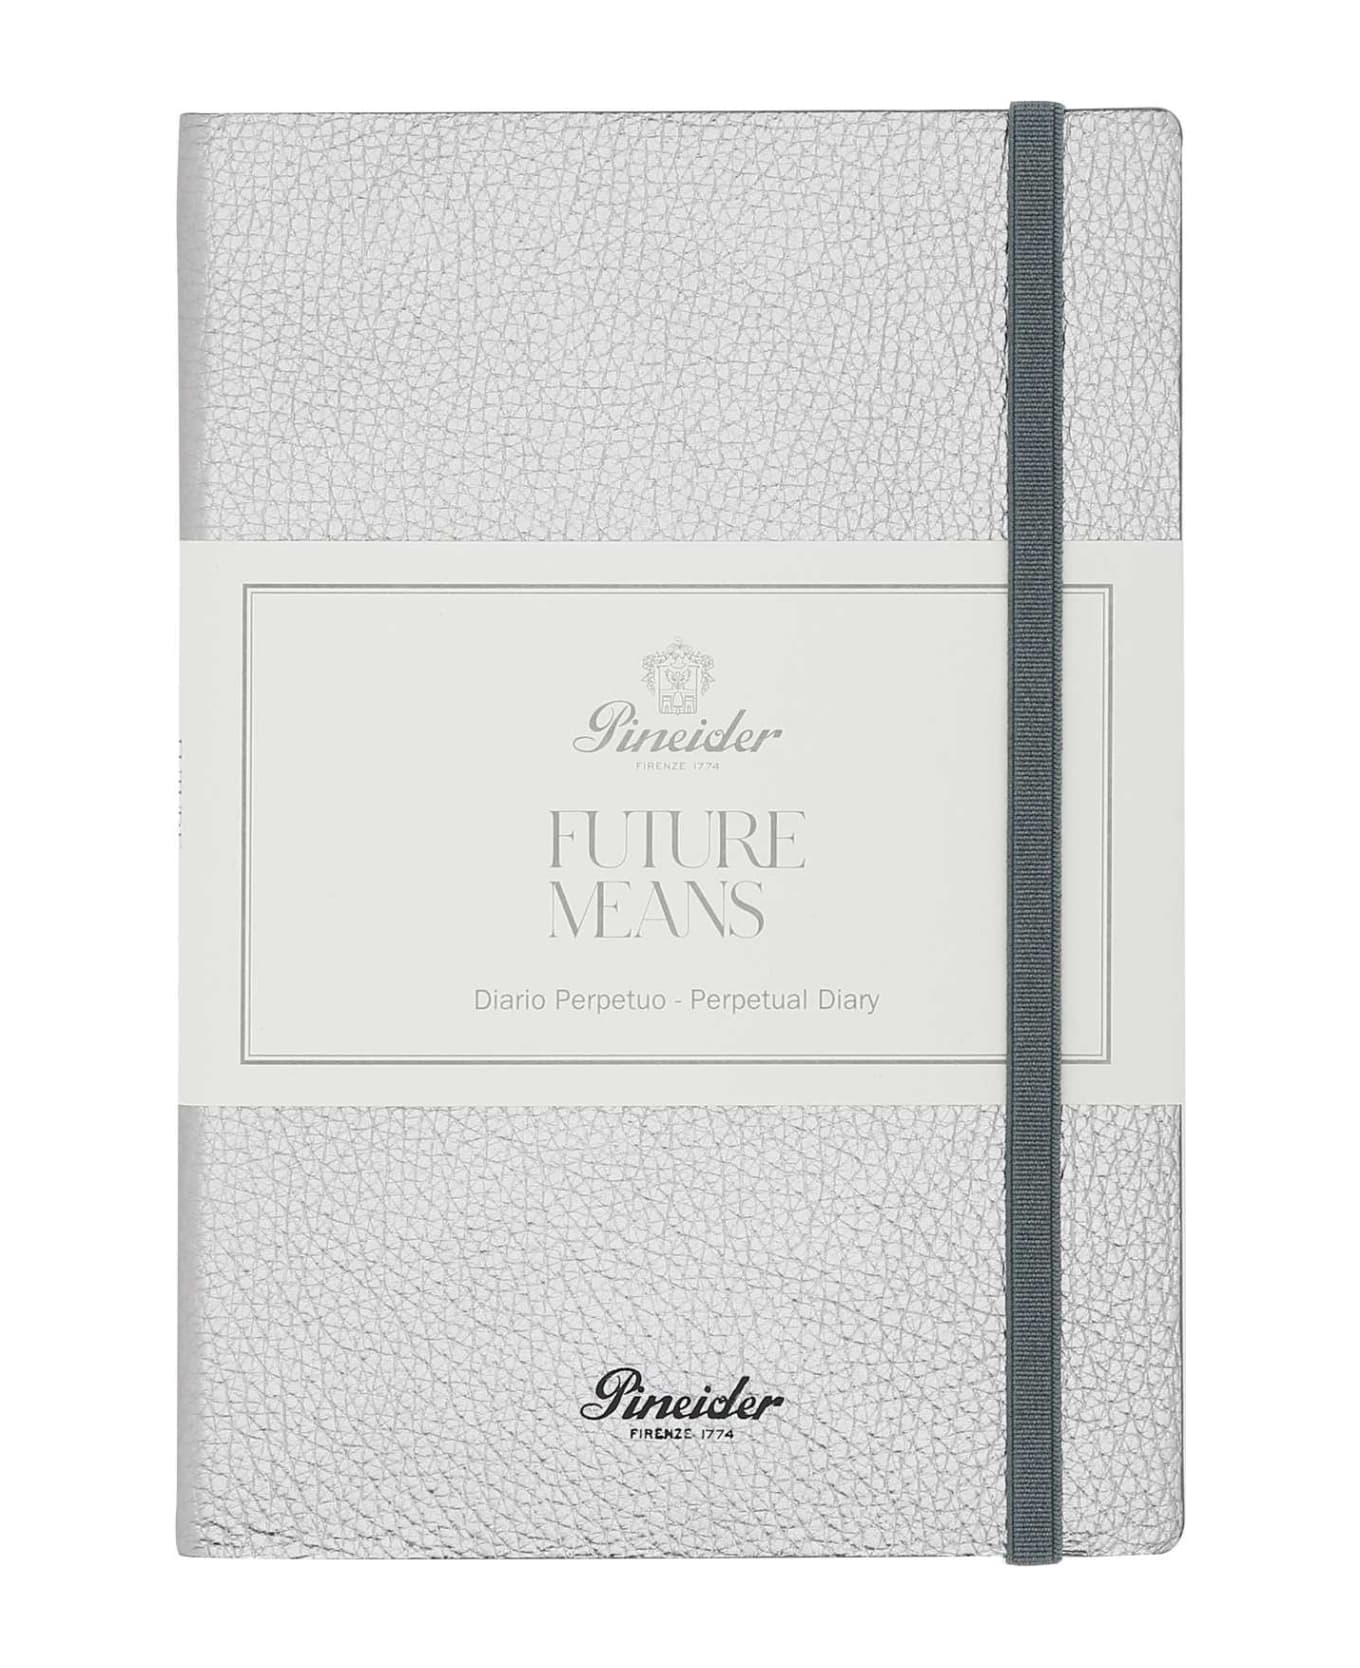 Pineider Silver Leather Future Means Diary - RUTHENIUM インテリア雑貨